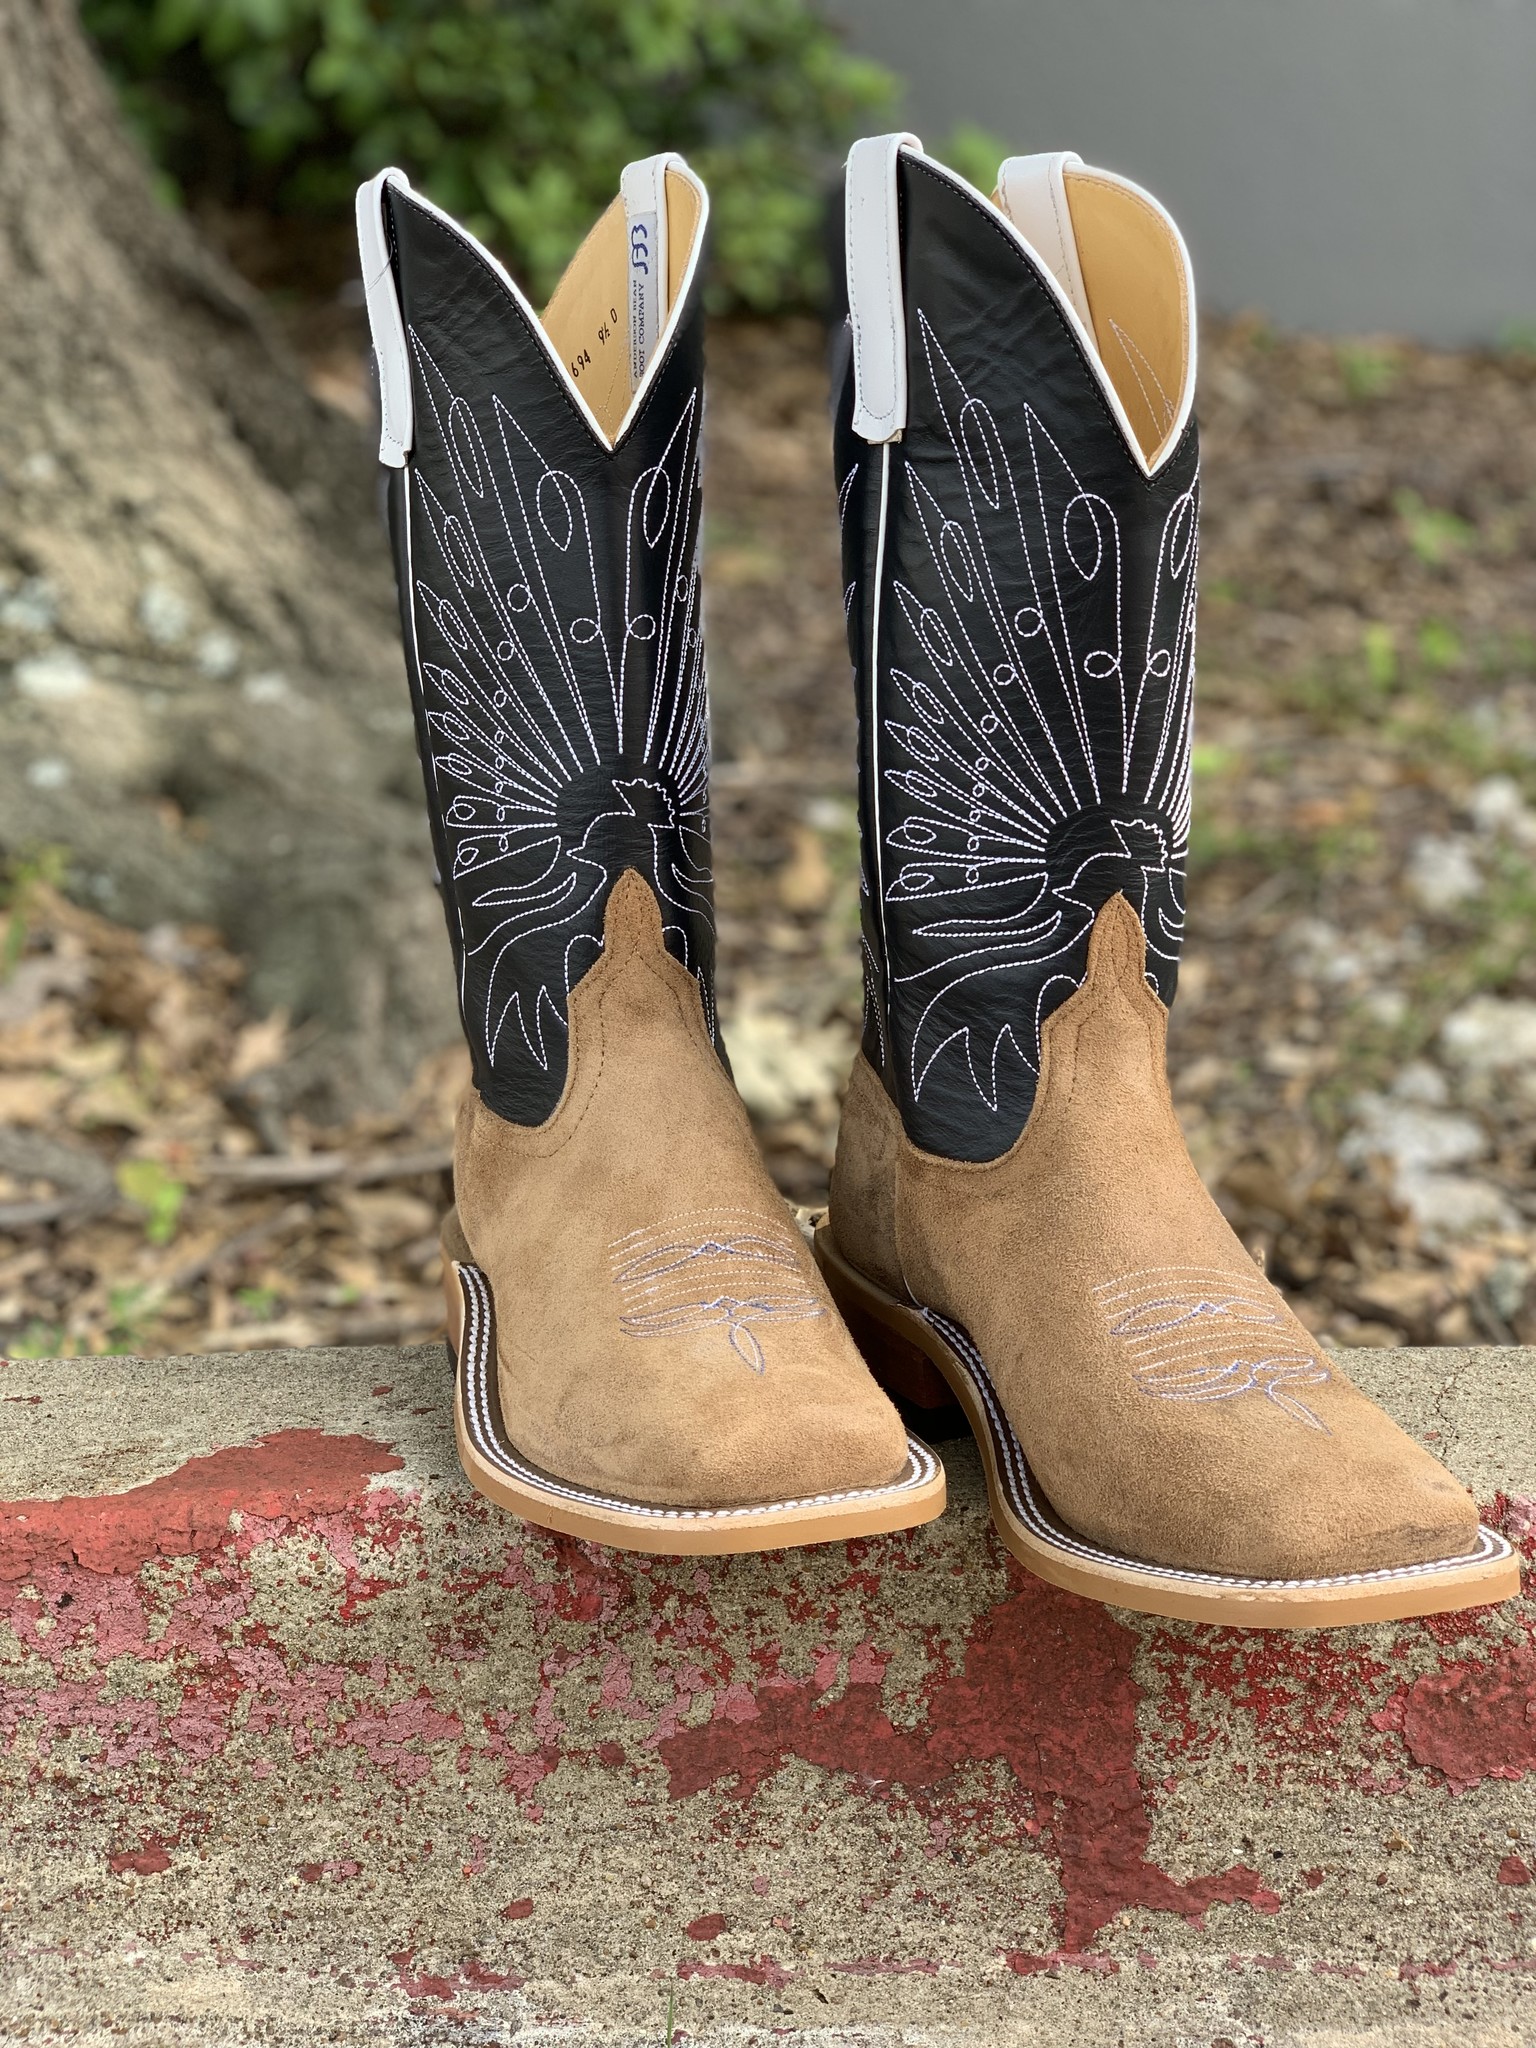 mens roughout cowboy boots